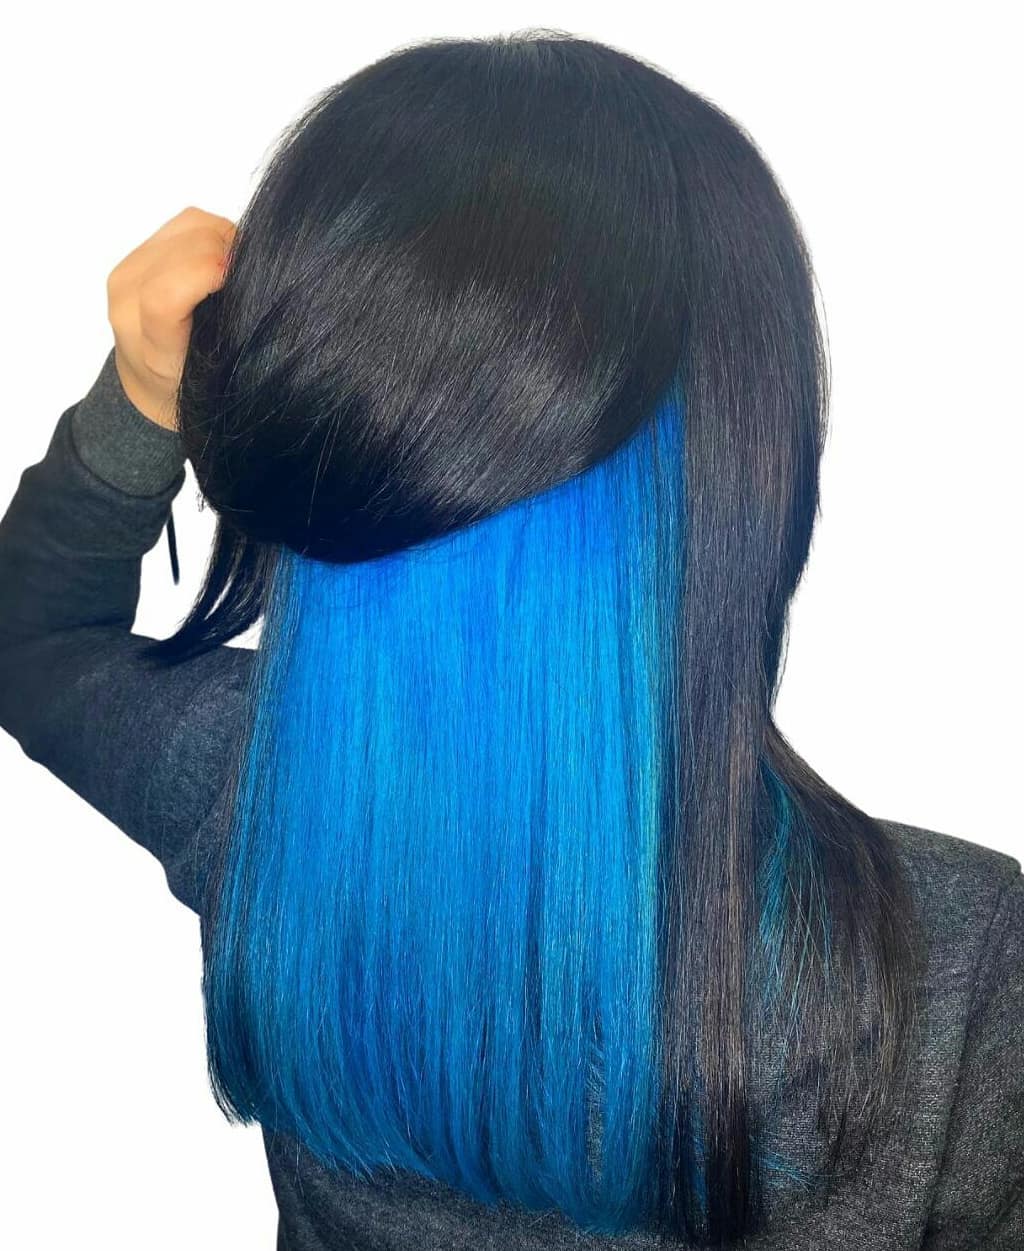 peekaboo bleu sur cheveux noirs